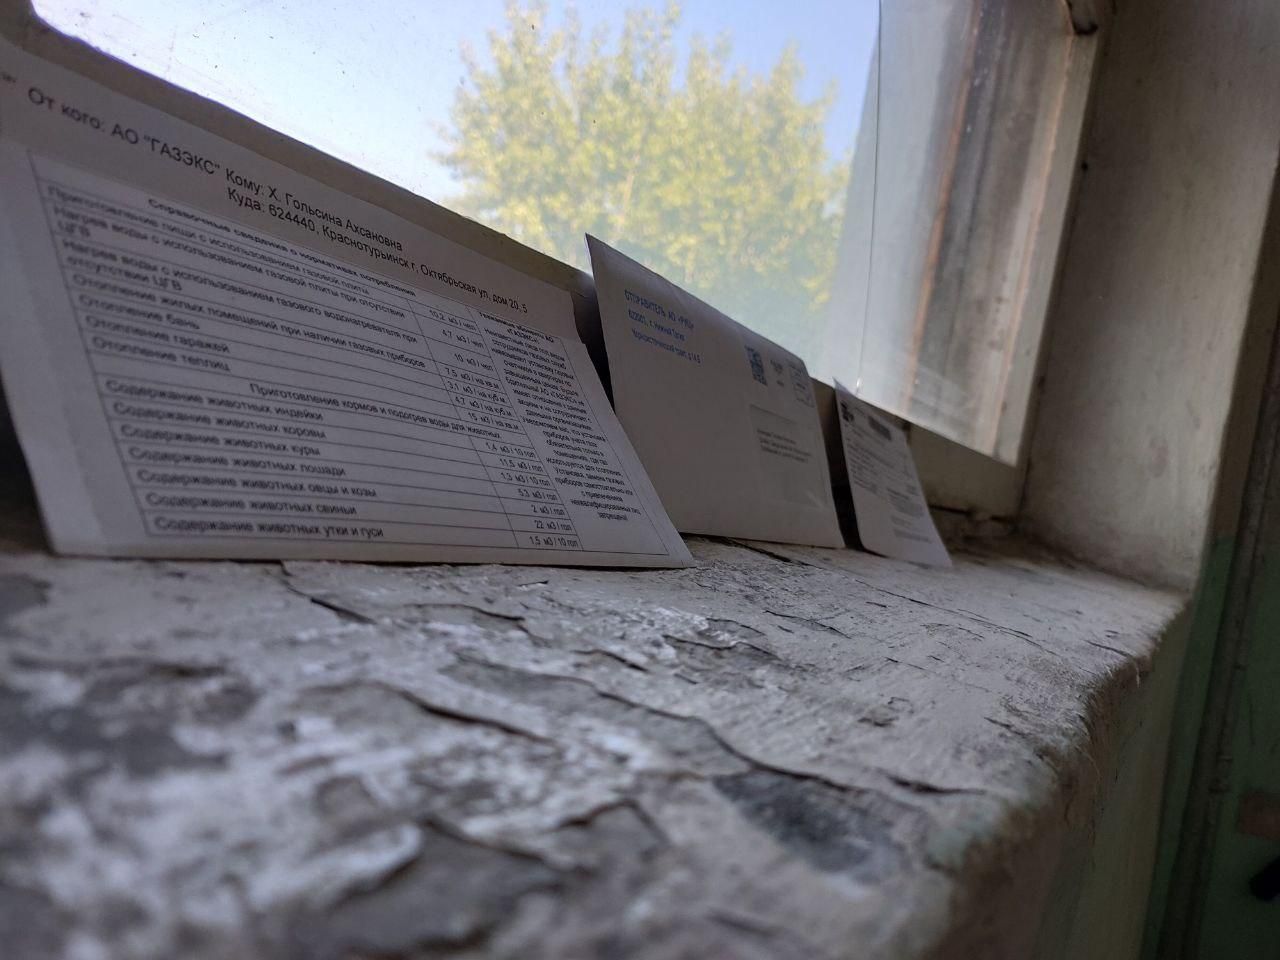 Жители многоквартирного дома получают почту на подоконнике подъезда